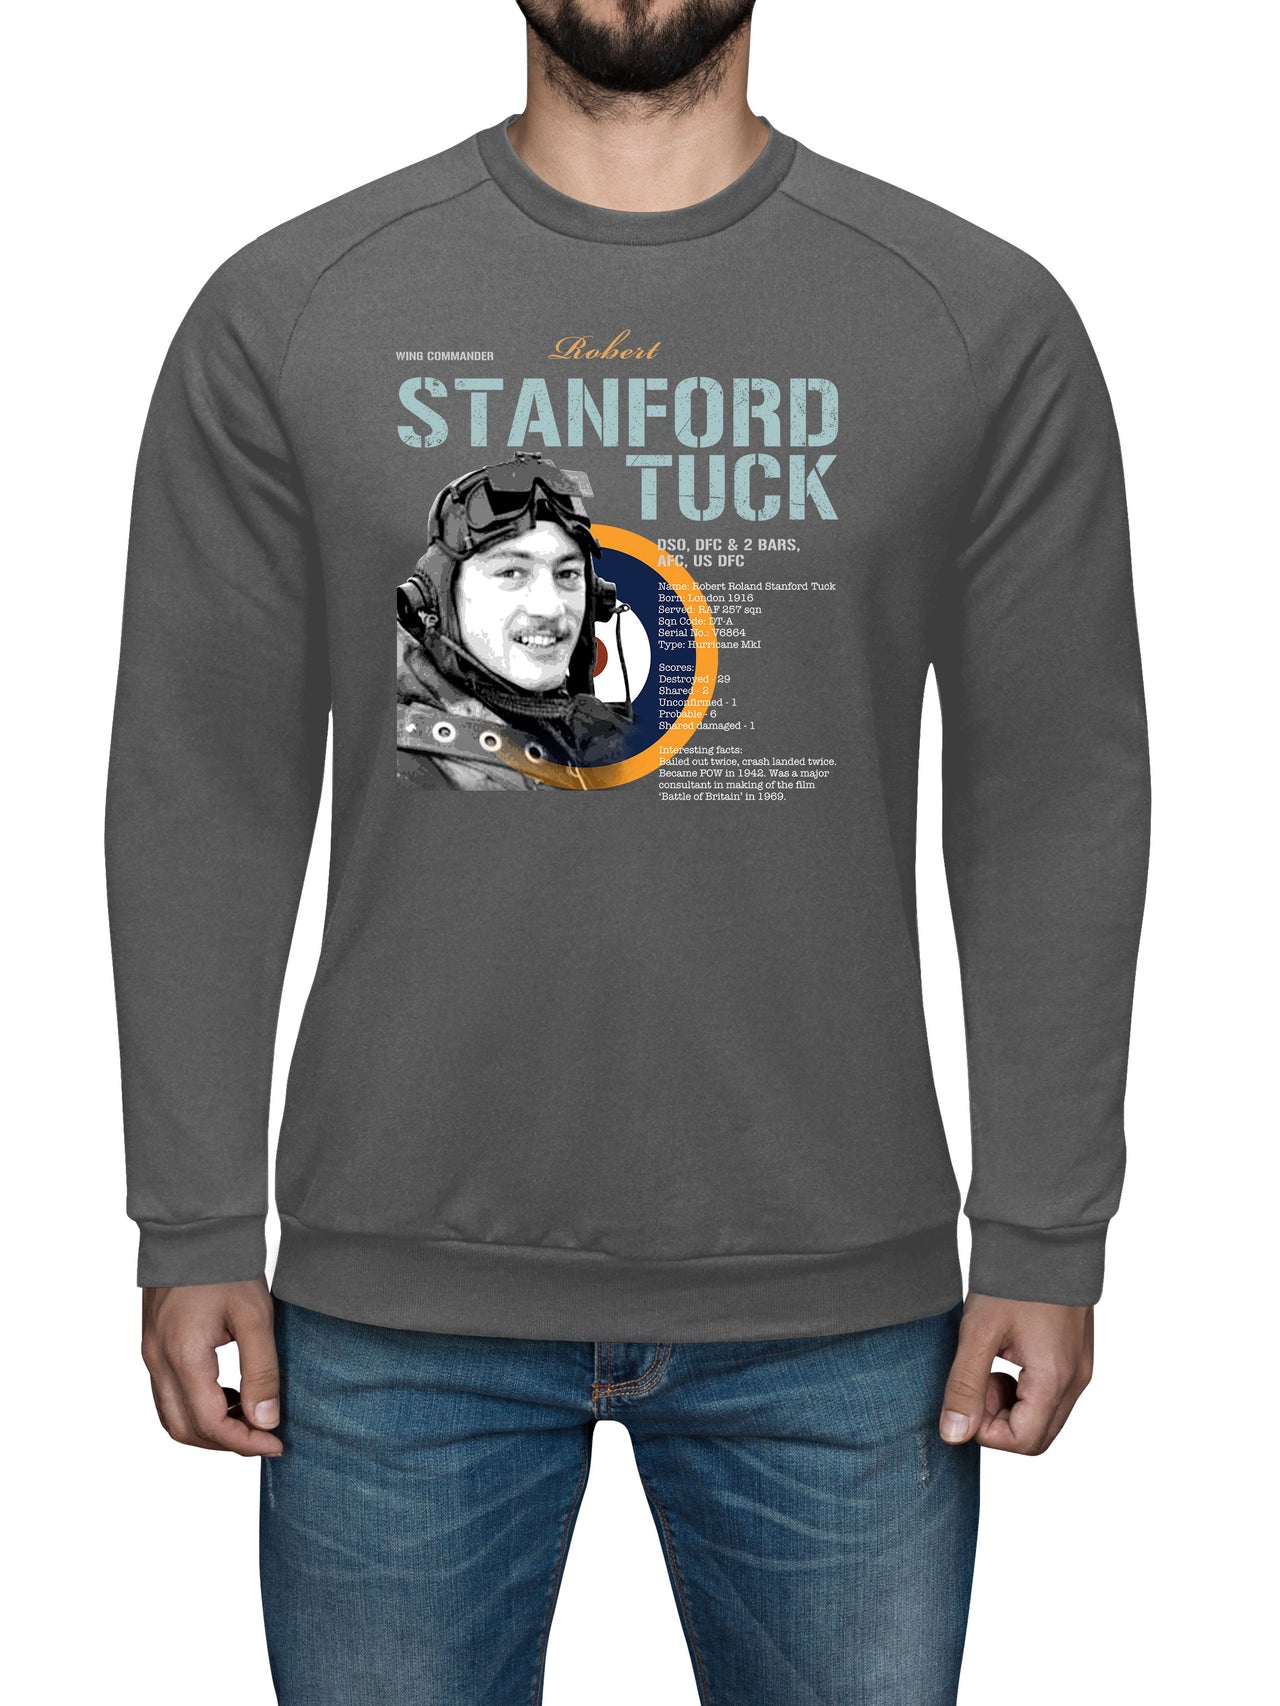 Robert Stanford Tuck - Sweat Shirt